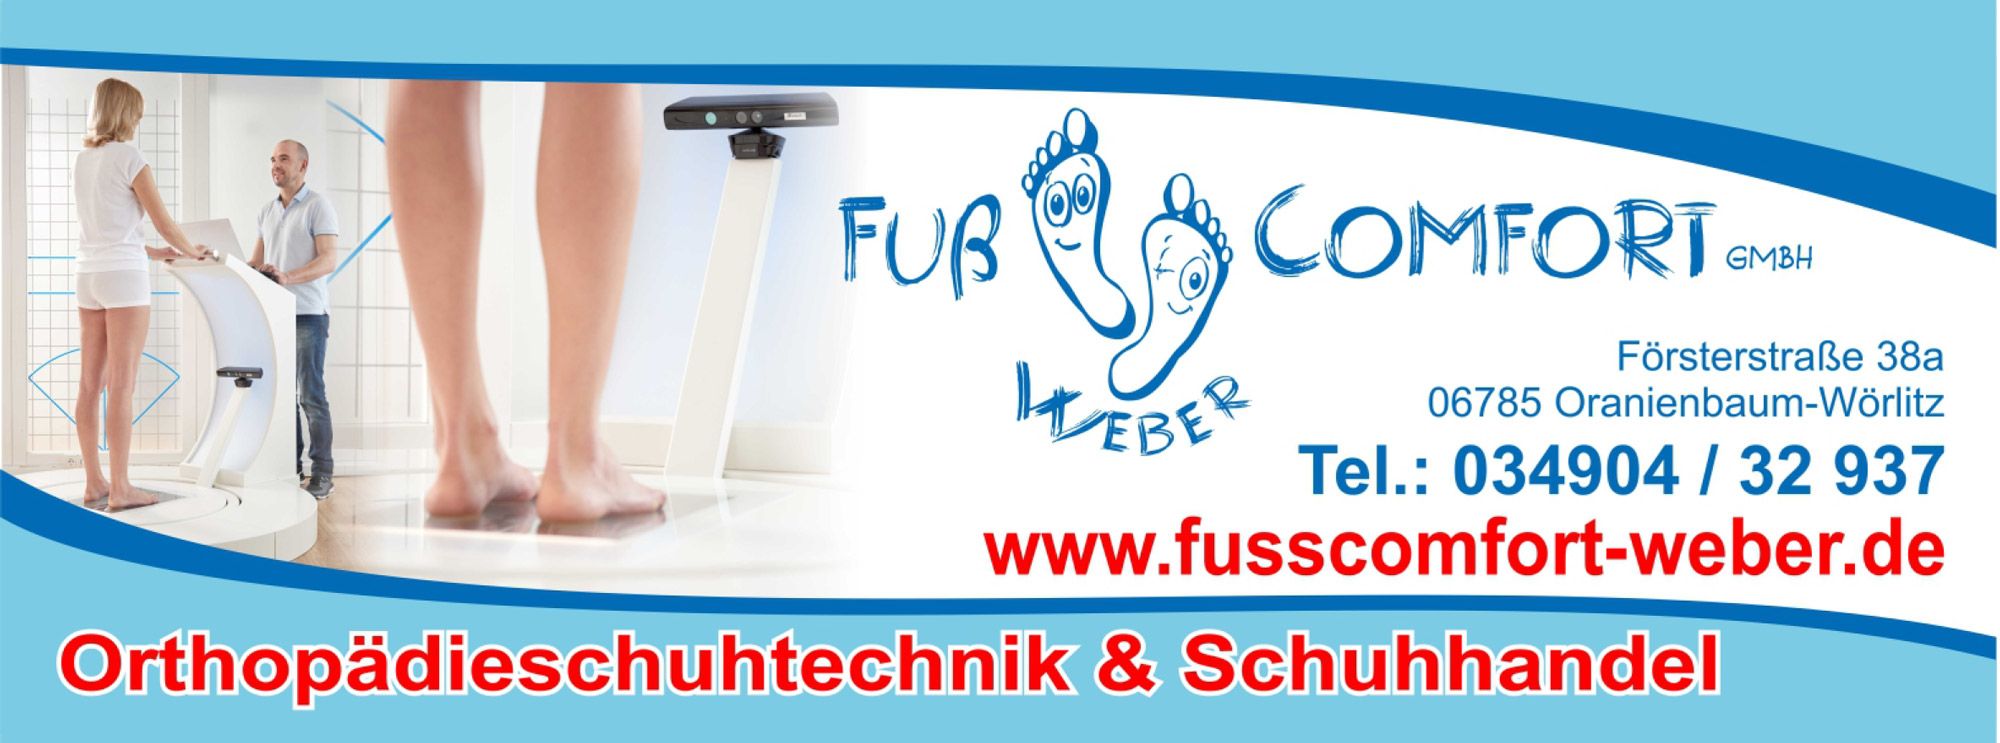 Fußcomfort Weber GmbH